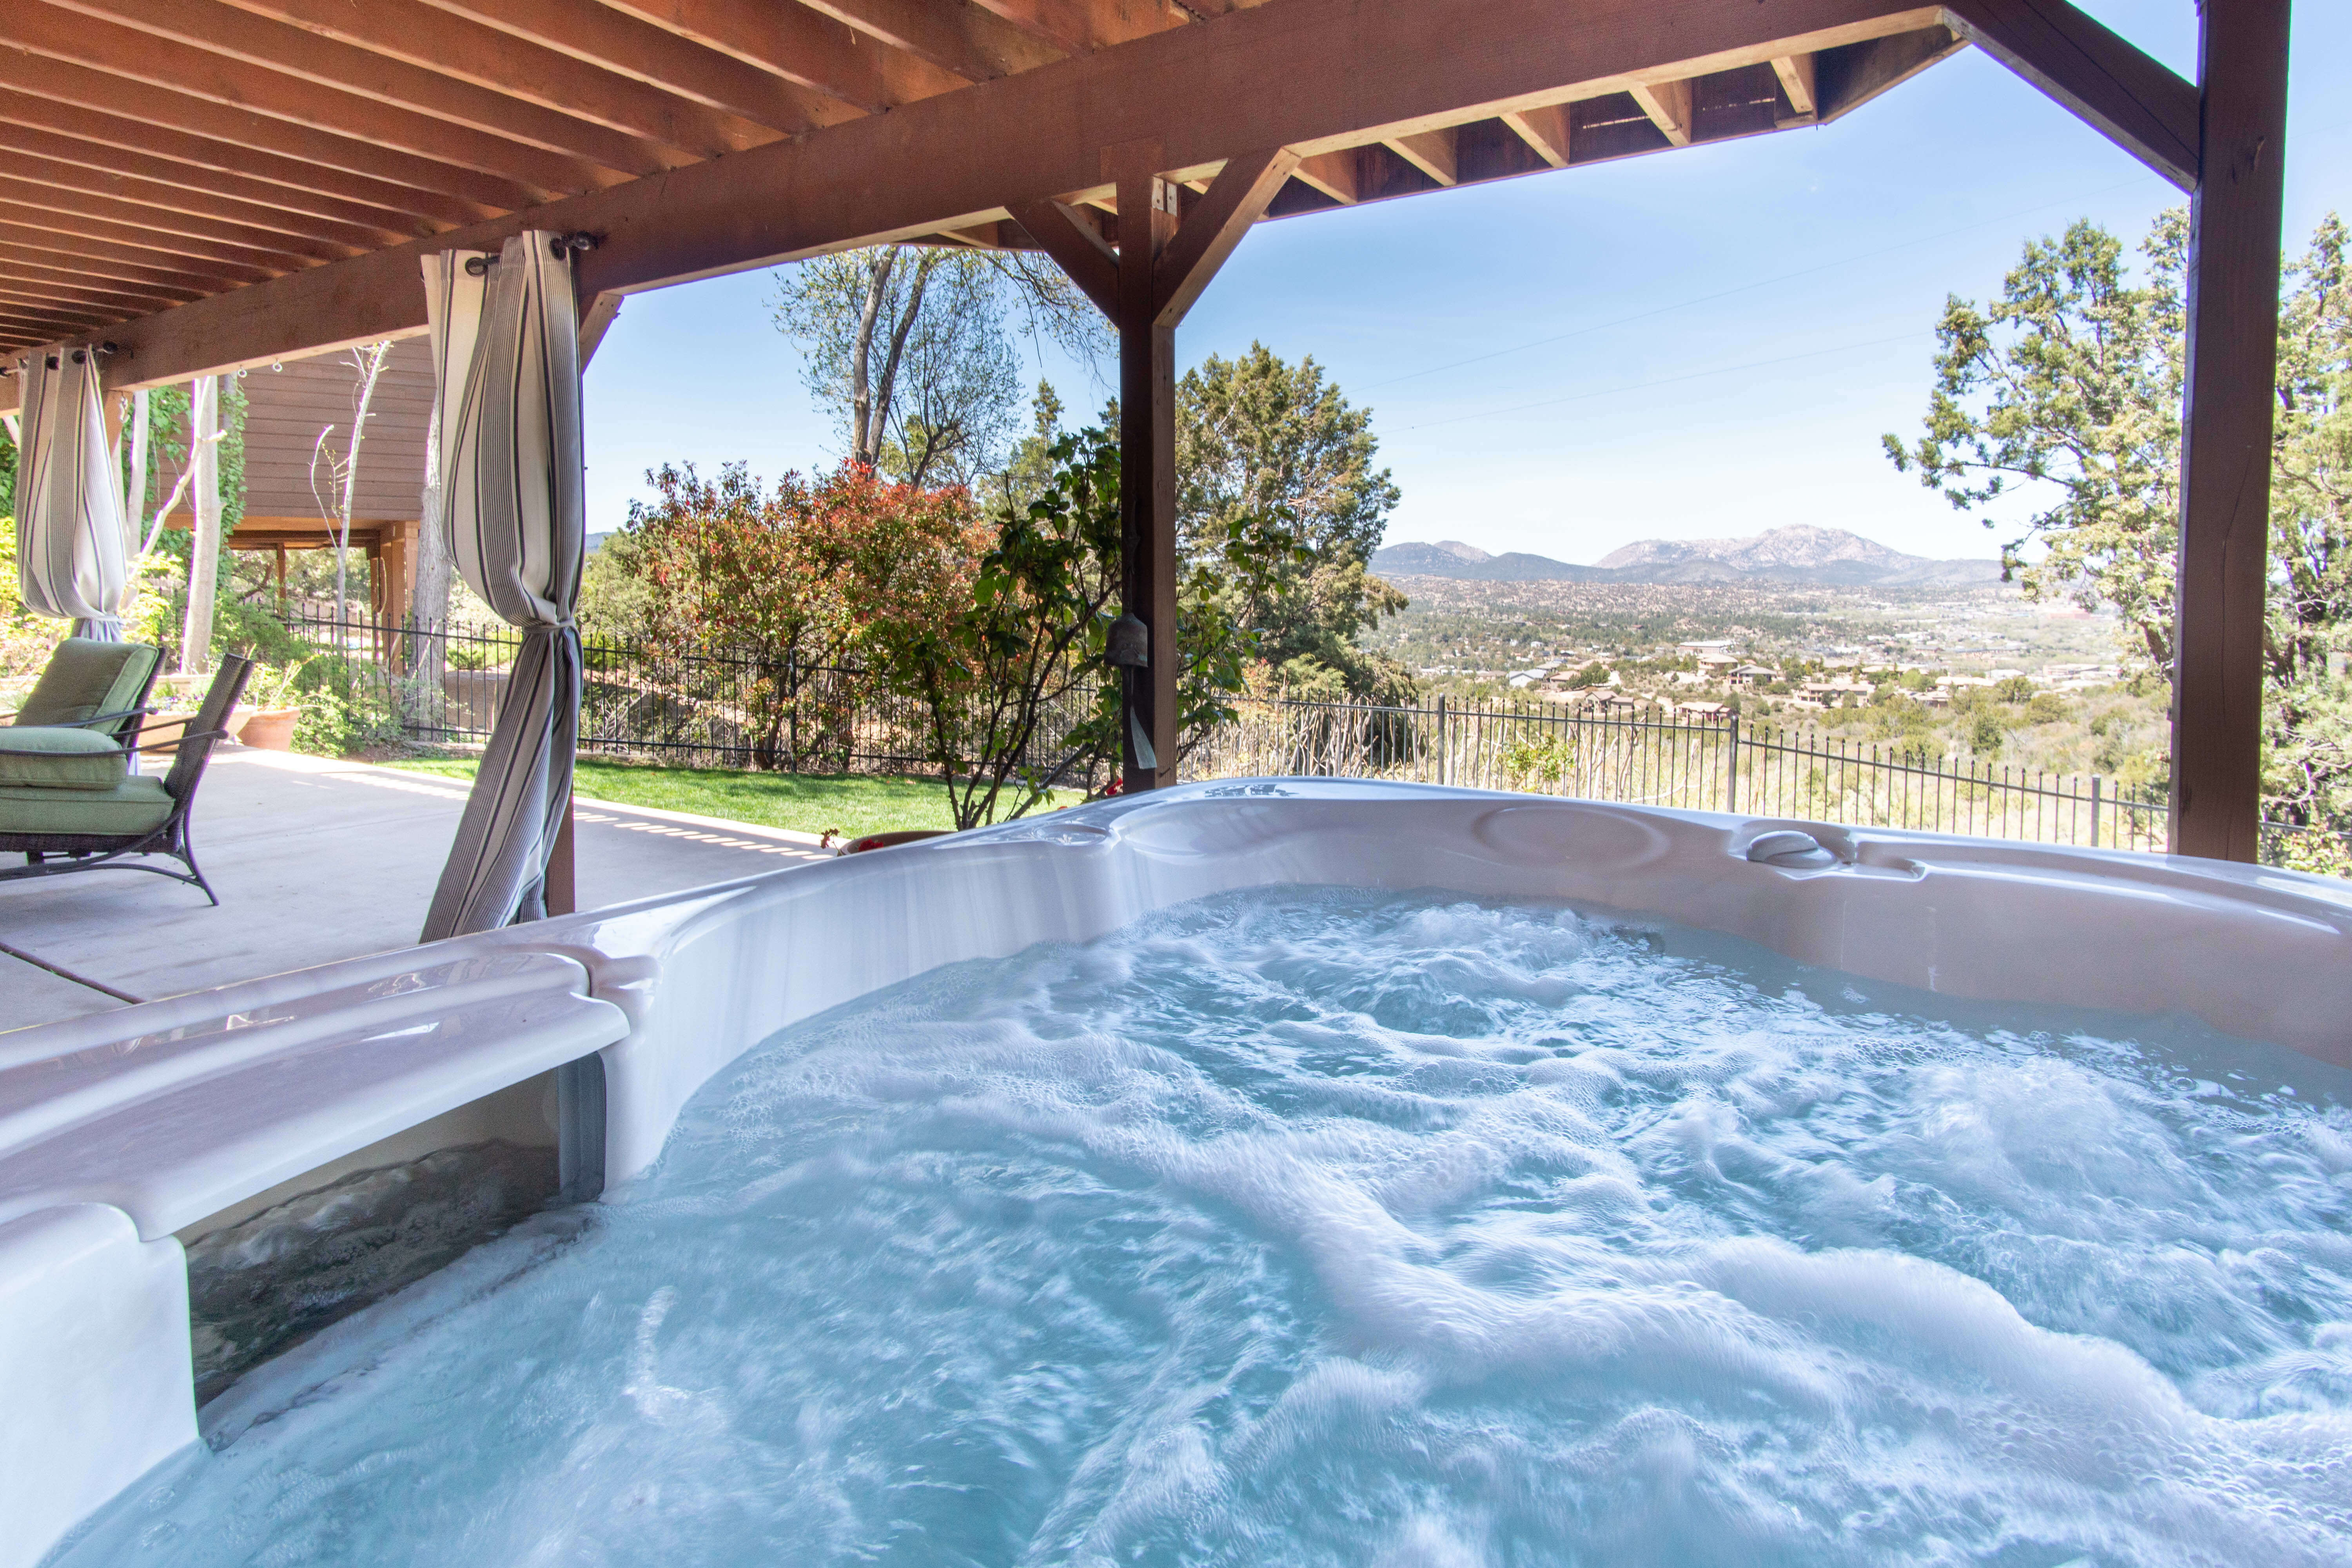 Build Your Dream Backyard Around a Hot Tub